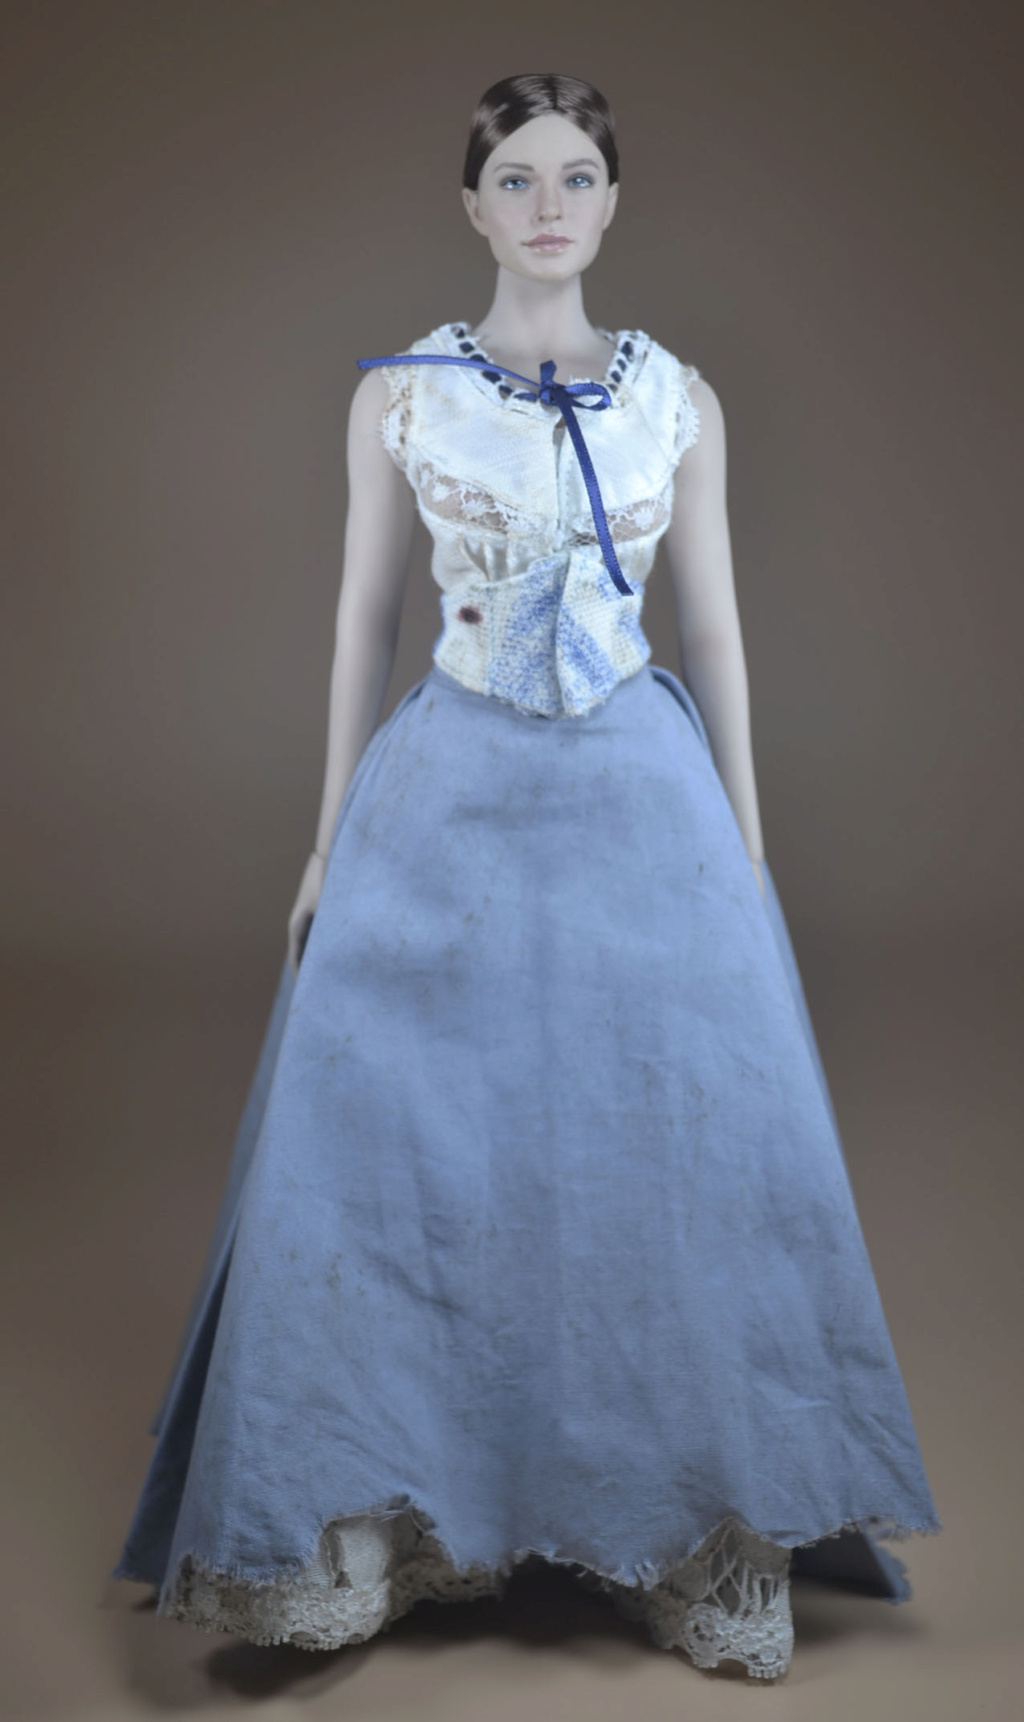 western - NEW PRODUCT: Wolford Toys: 1/6 Western Vintage Dress WF-2021AB _dsc3725